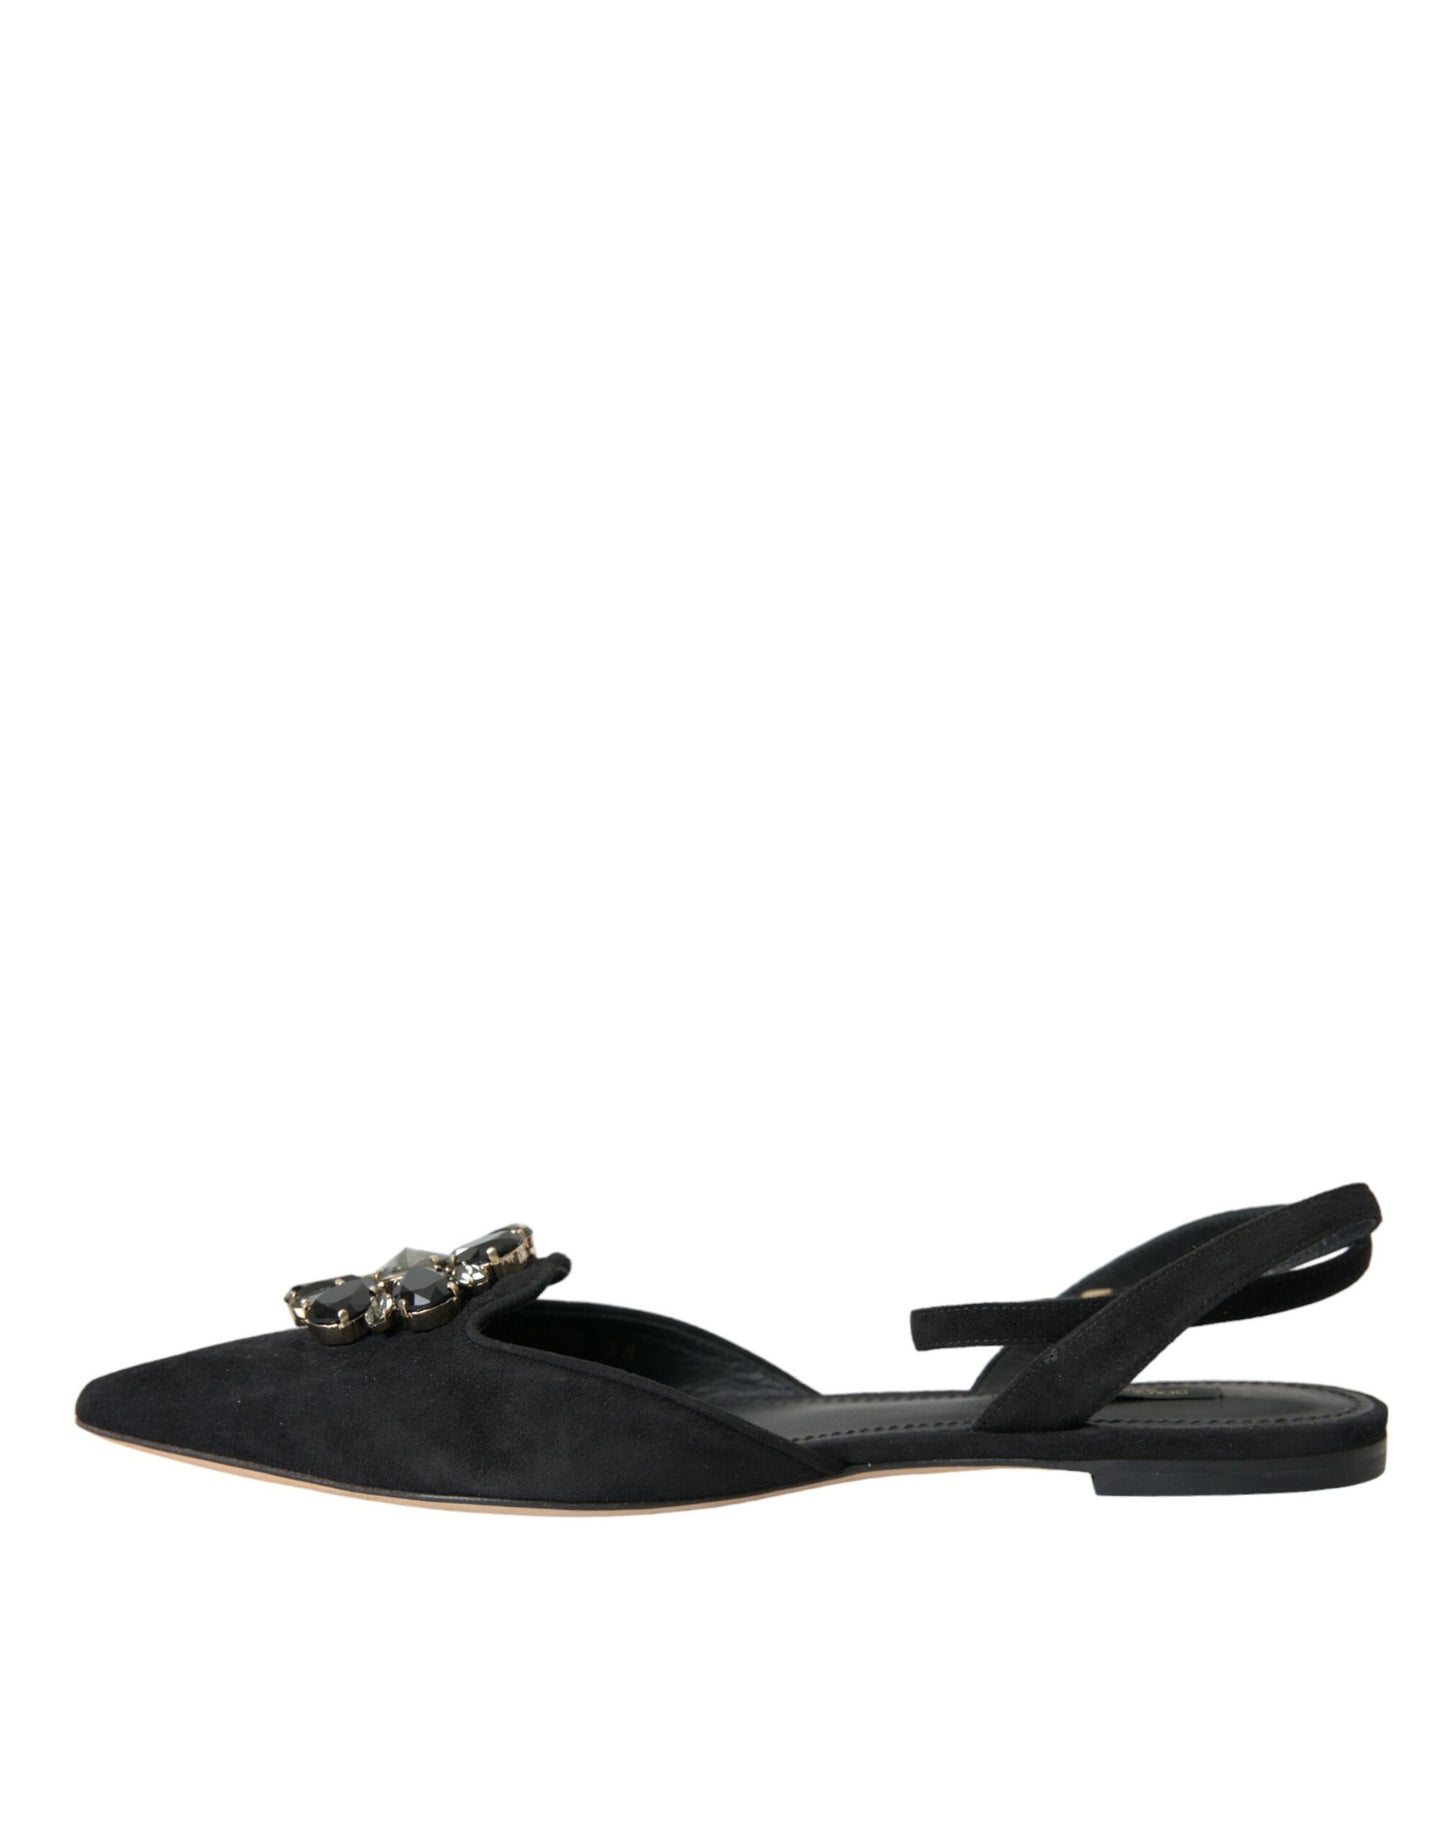 Dolce & Gabbana Black Leather Crystal Slingback Sandals Shoes